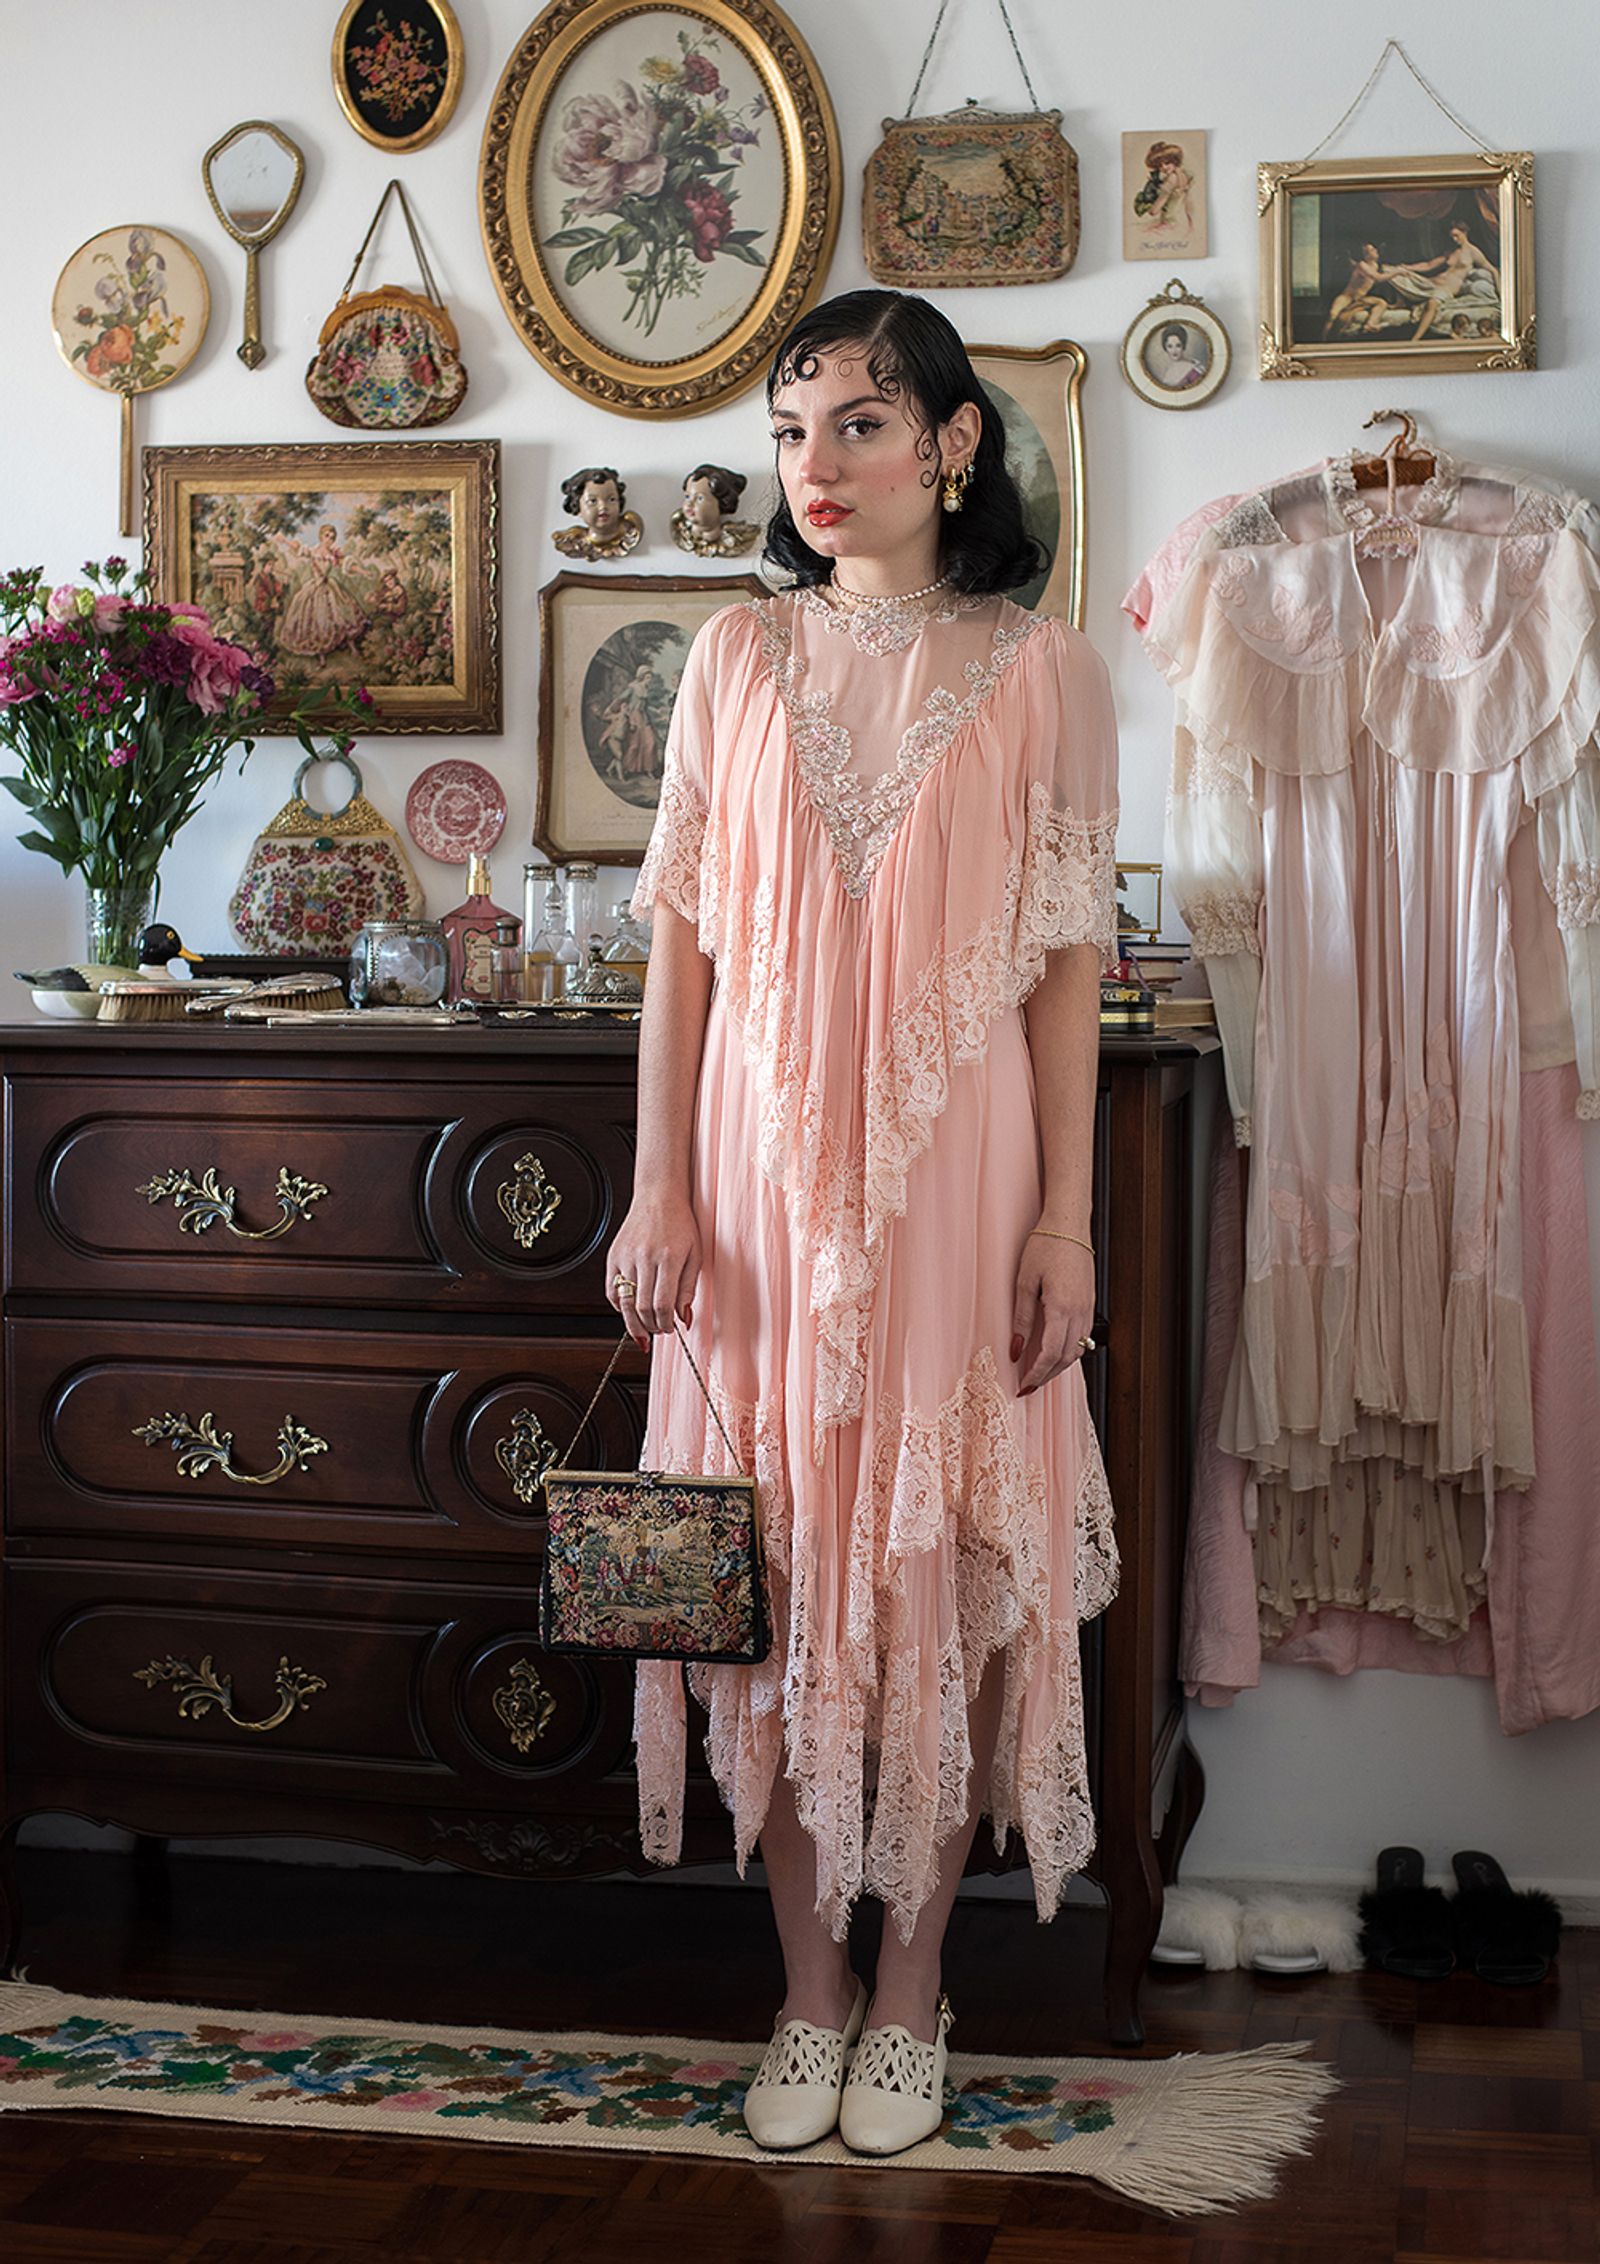 © Camila Falcão - Ligia, vintage clothing saleswoman, poses wearing one of her favorite vintage dresses